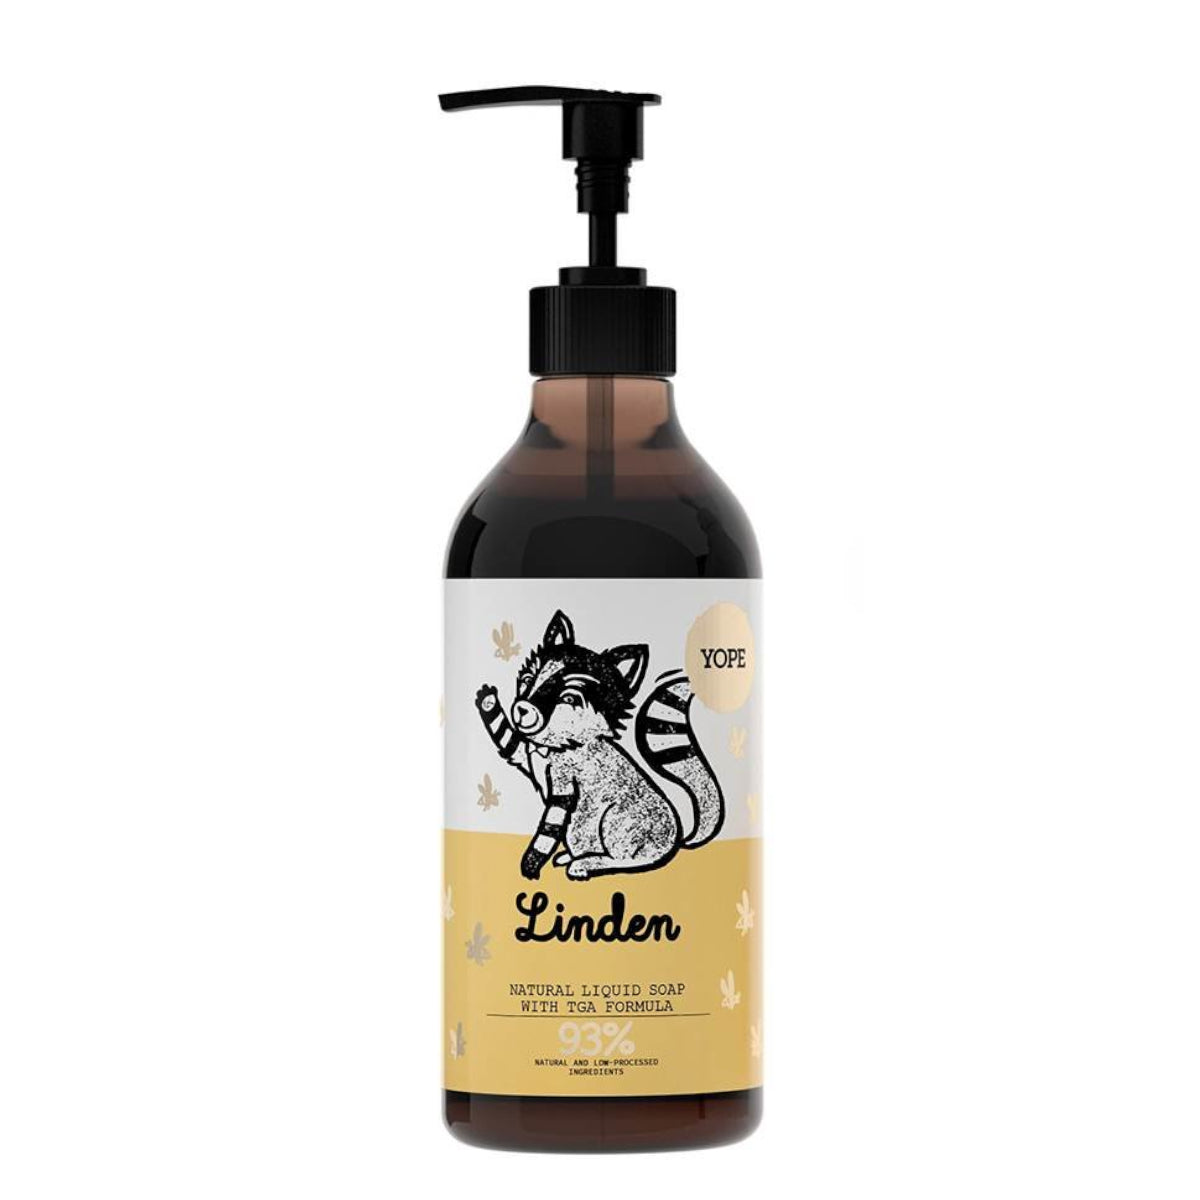 Yope Natural Liquid Soap Linden - Roxie Cosmetics